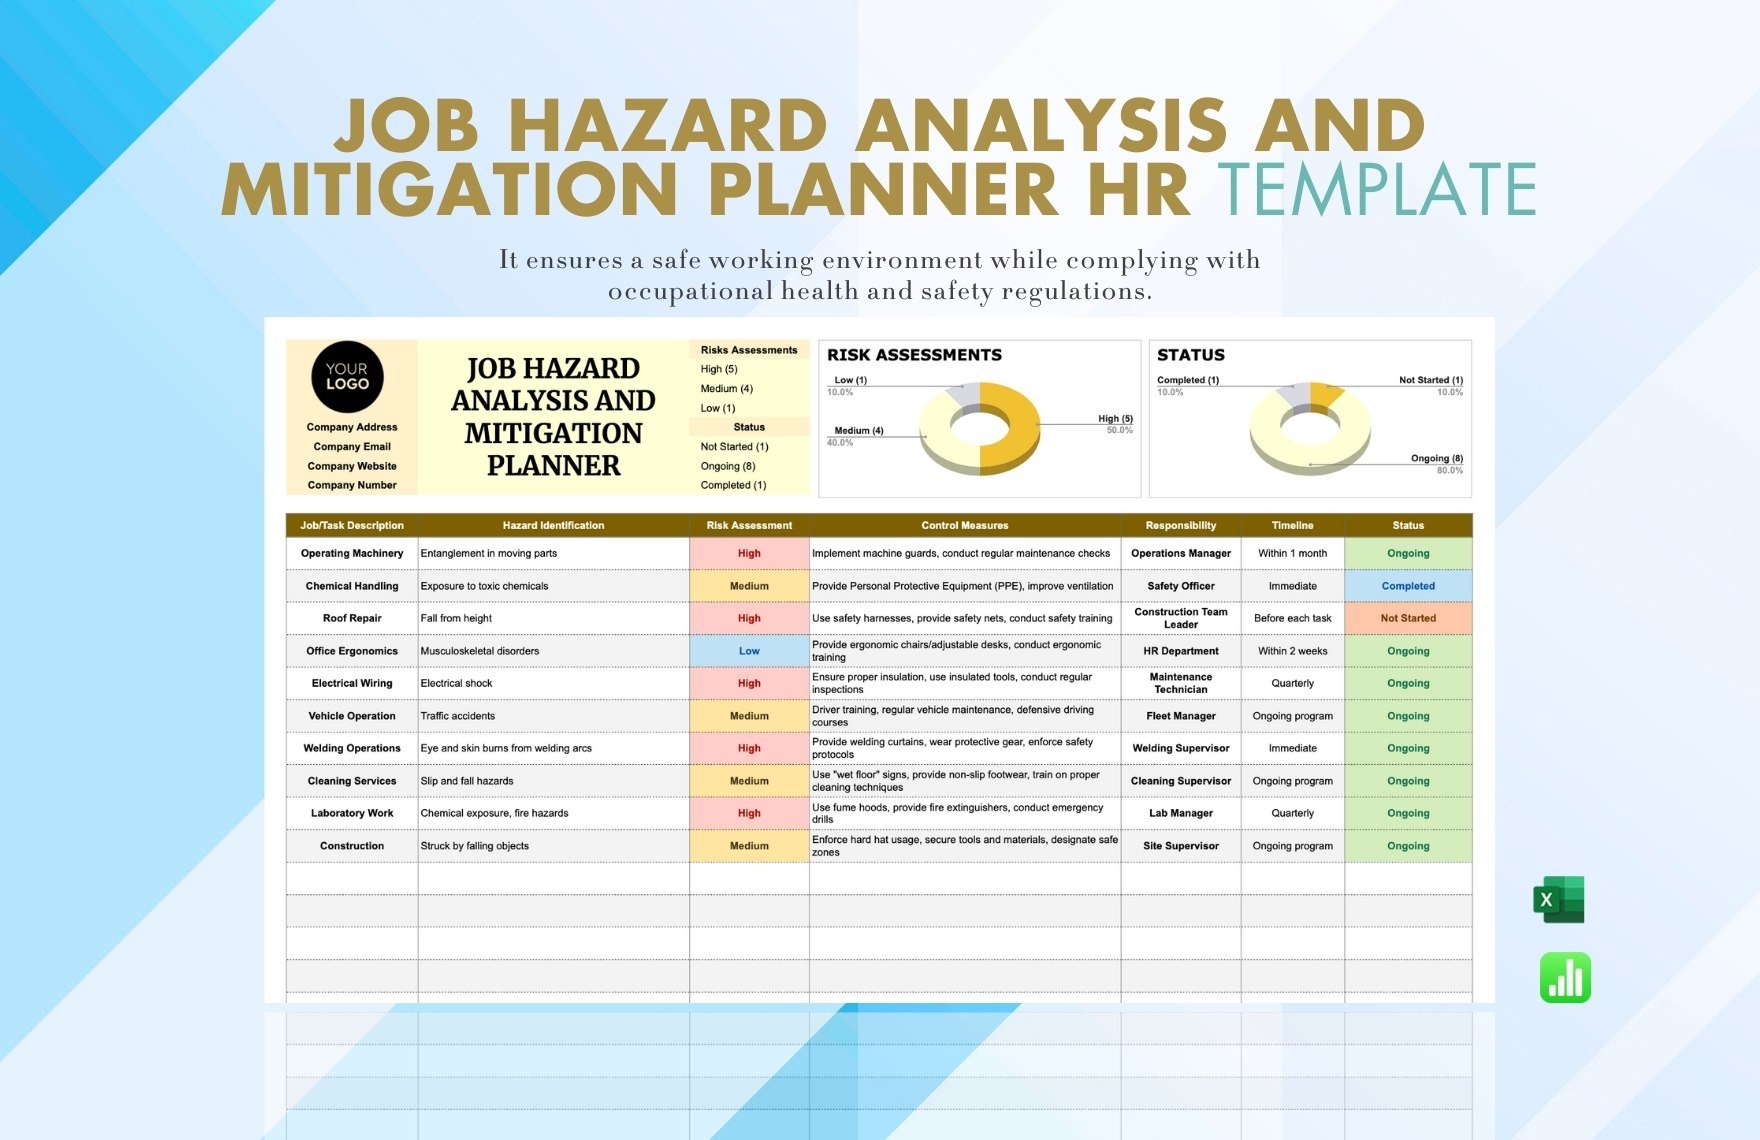 Job Hazard Analysis and Mitigation Planner HR Template in Excel, Google Sheets